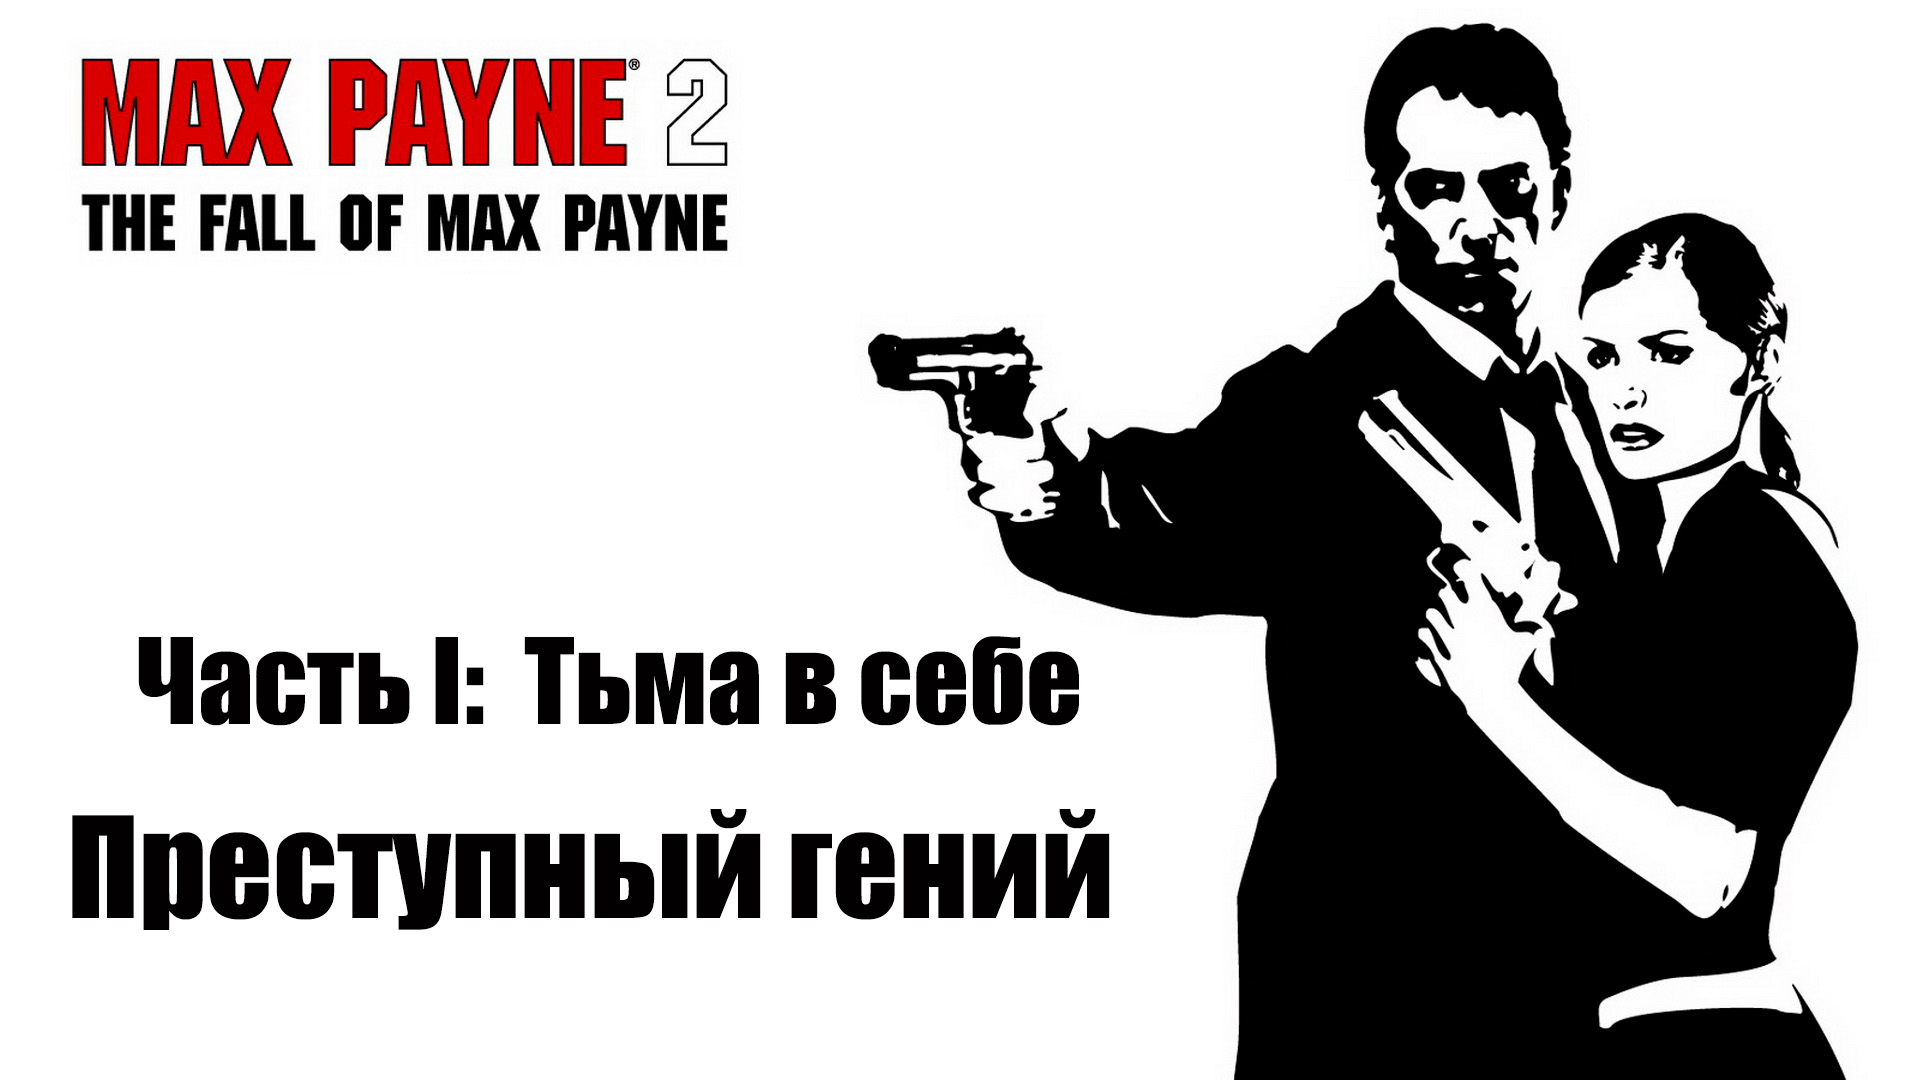 Max Payne 2 - Спасение Владимира Лема